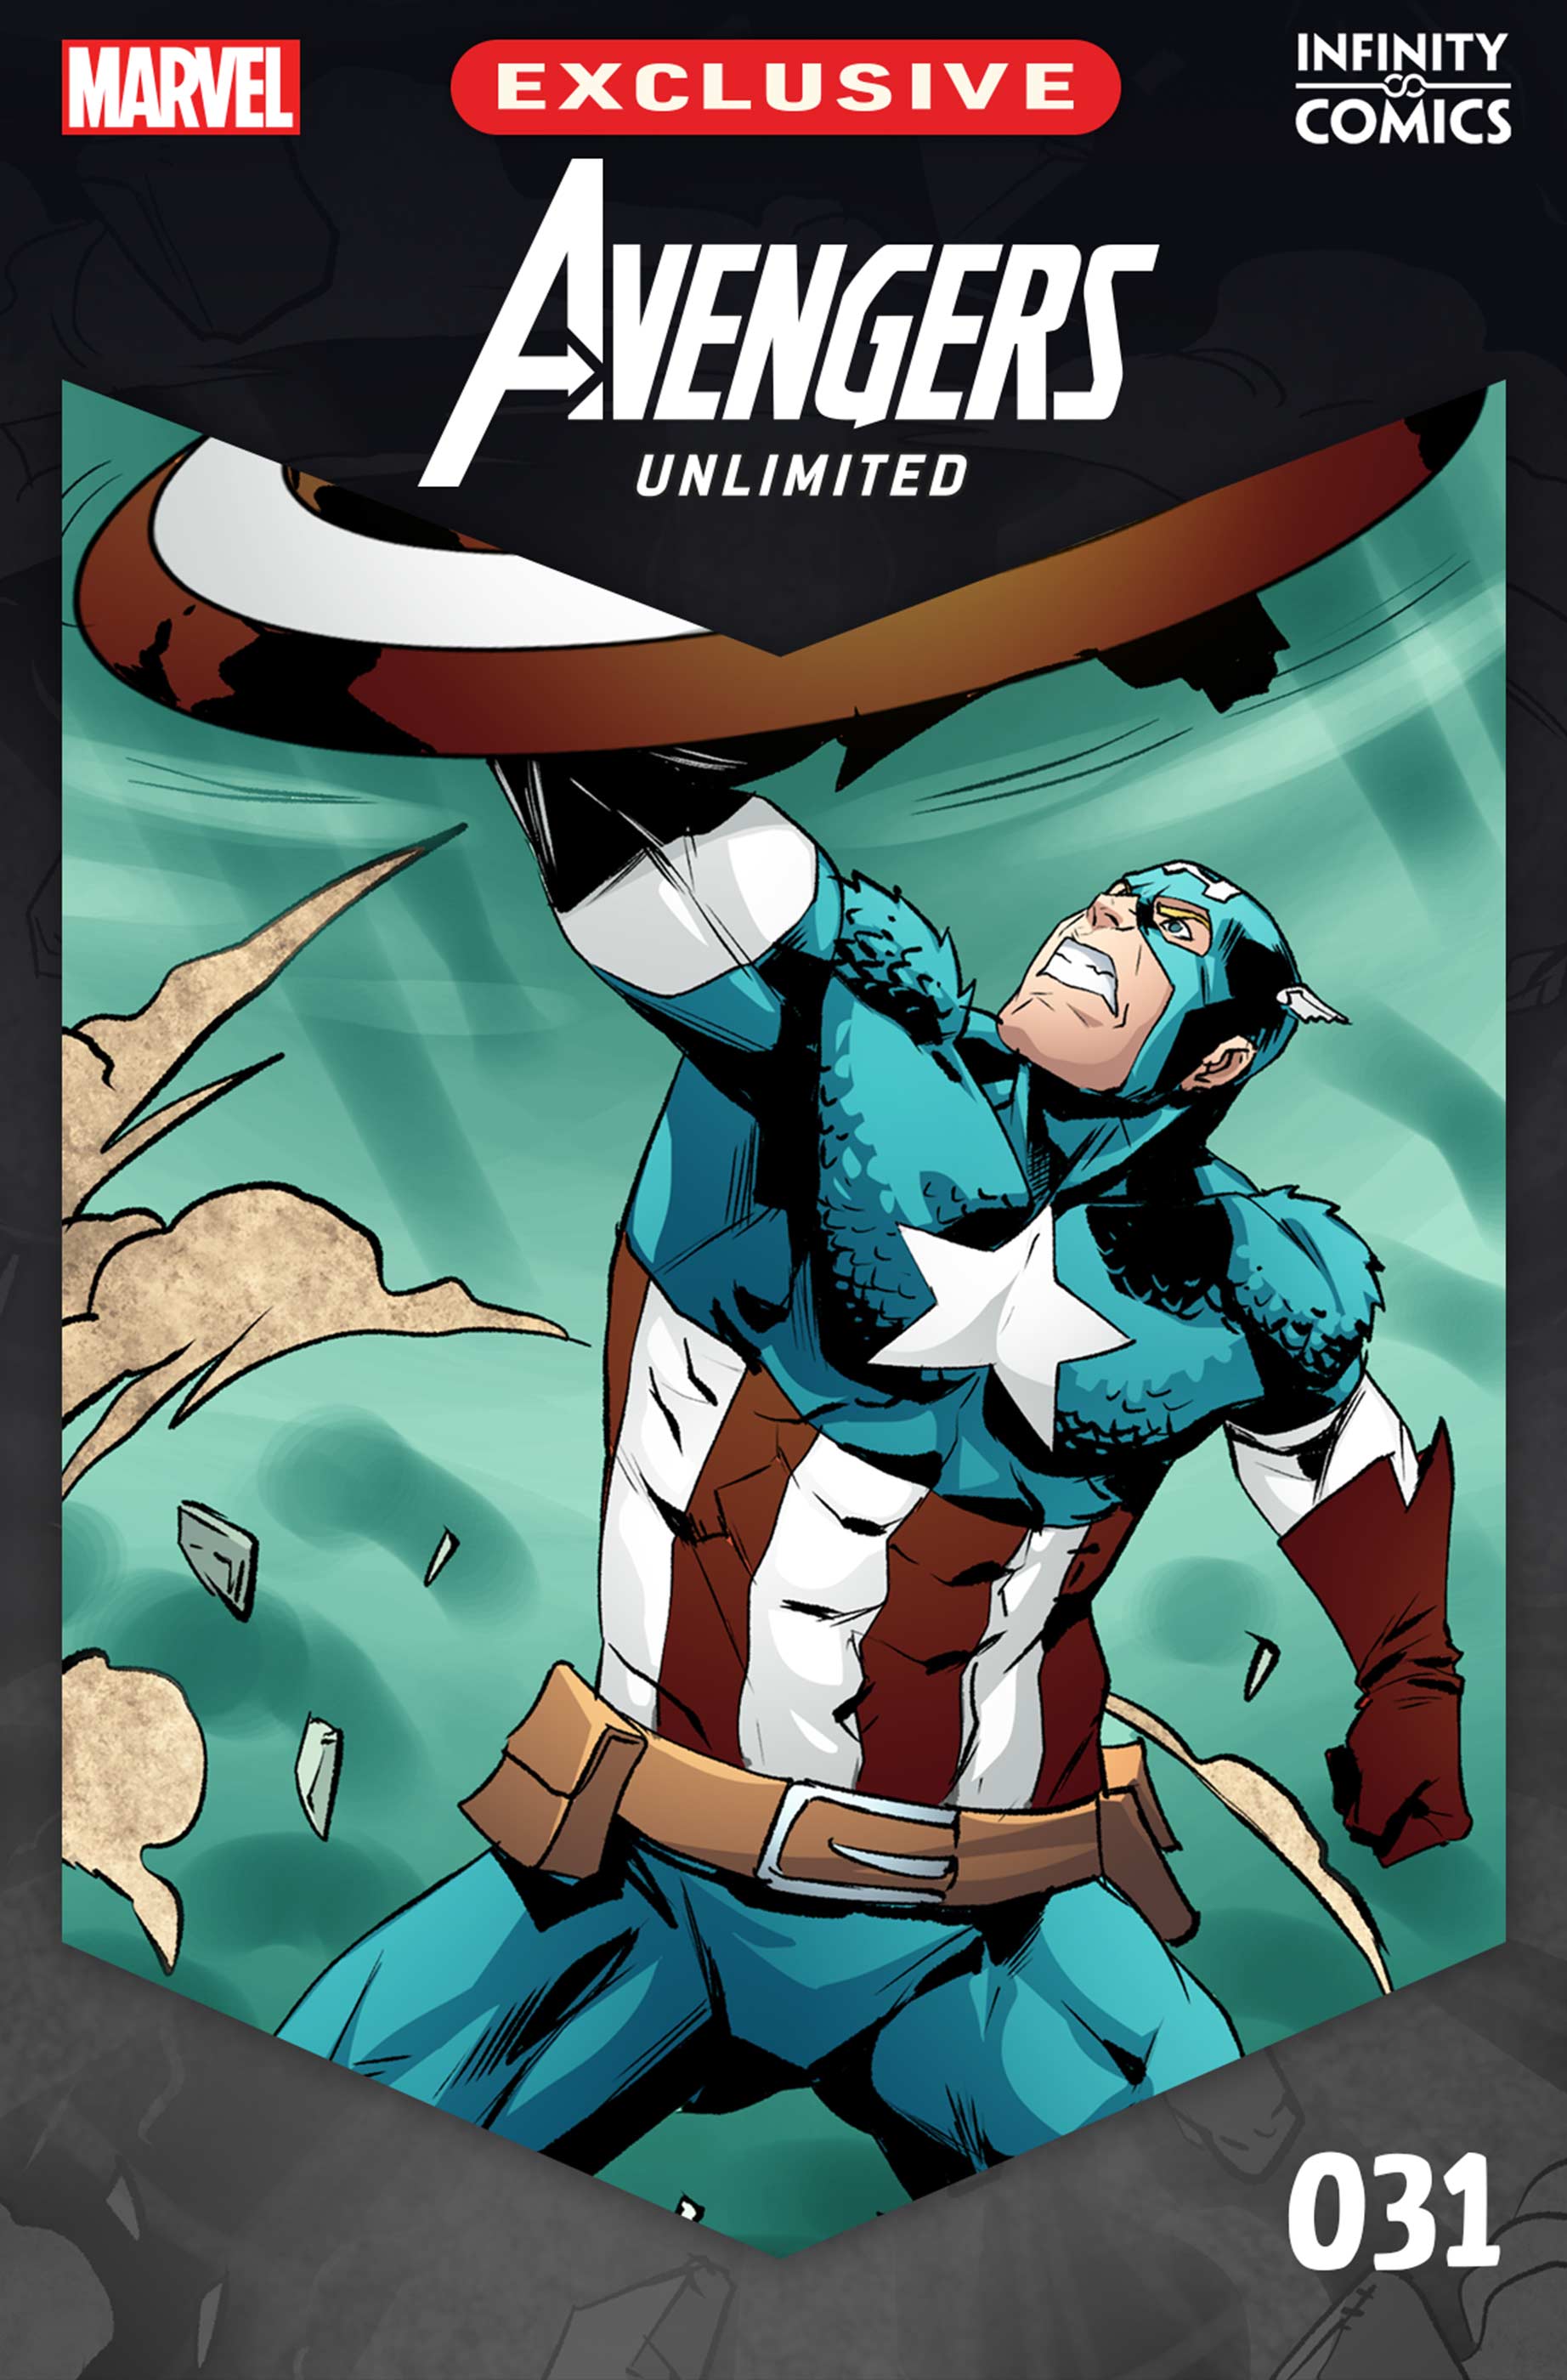 Avengers Unlimited Infinity Comic (2022) #31